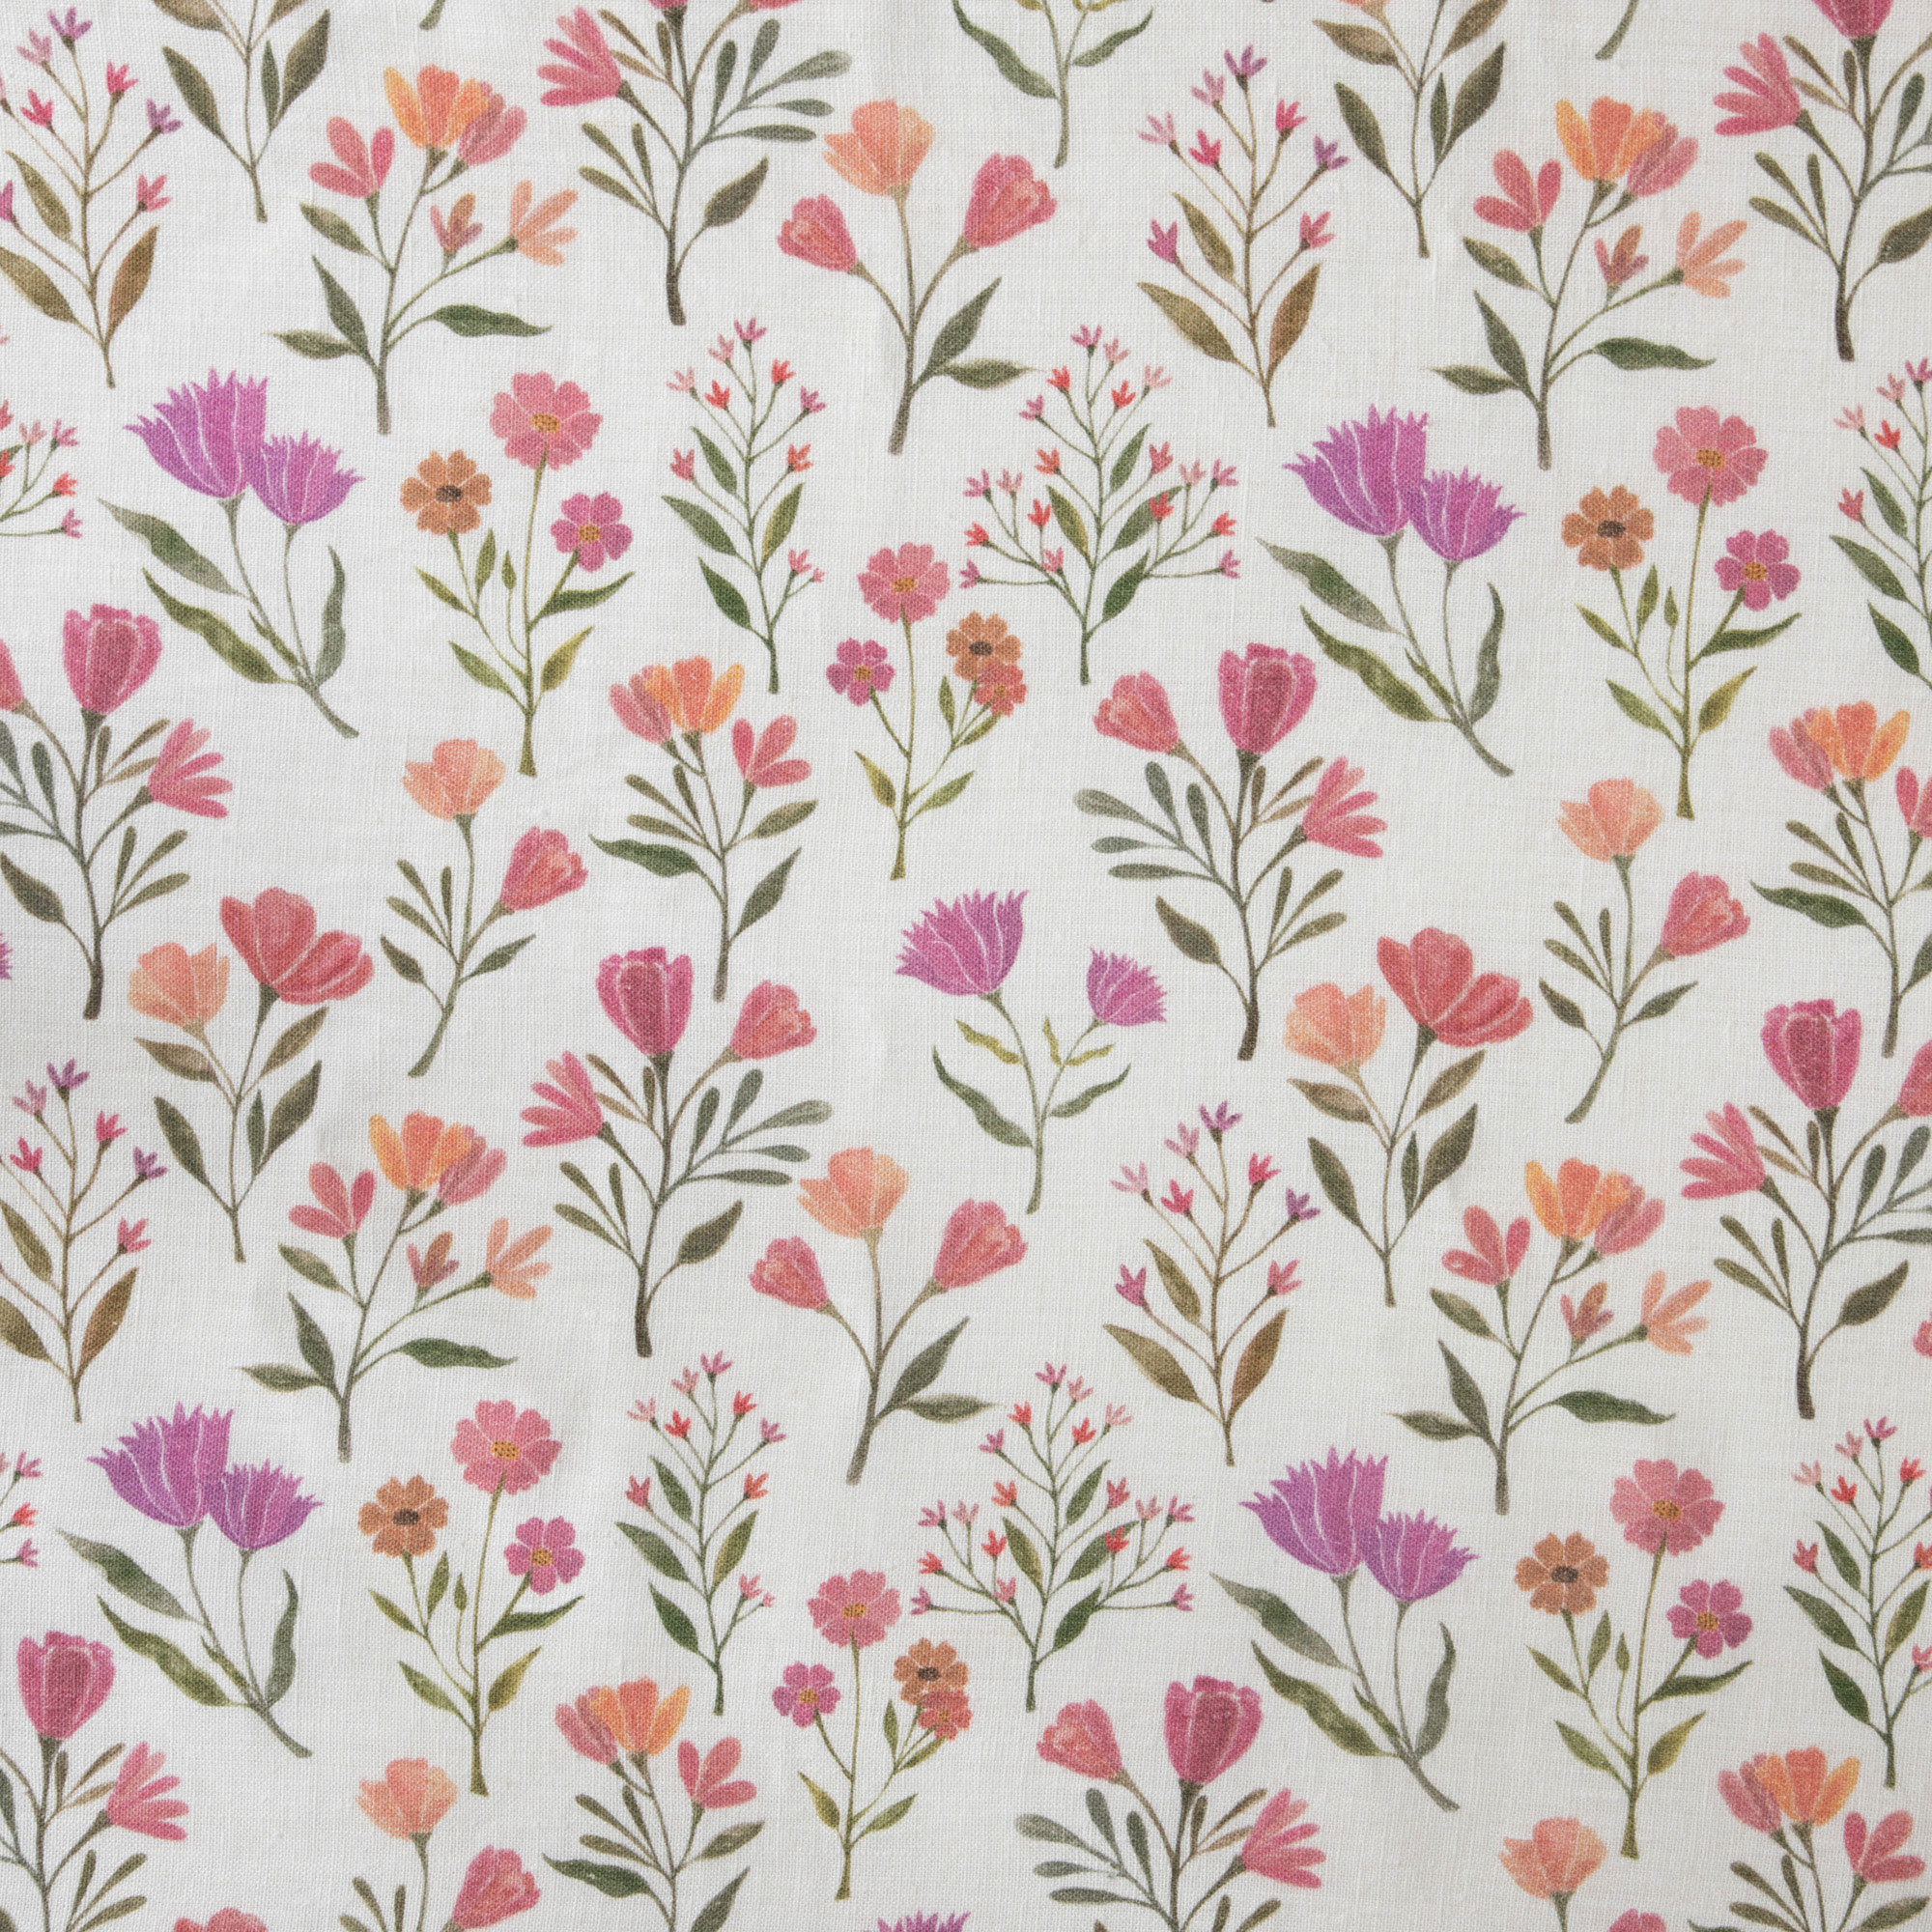 100% Linen Princess Margaret’s Flower Garden Fabric Swatch 15cm x 15 cm